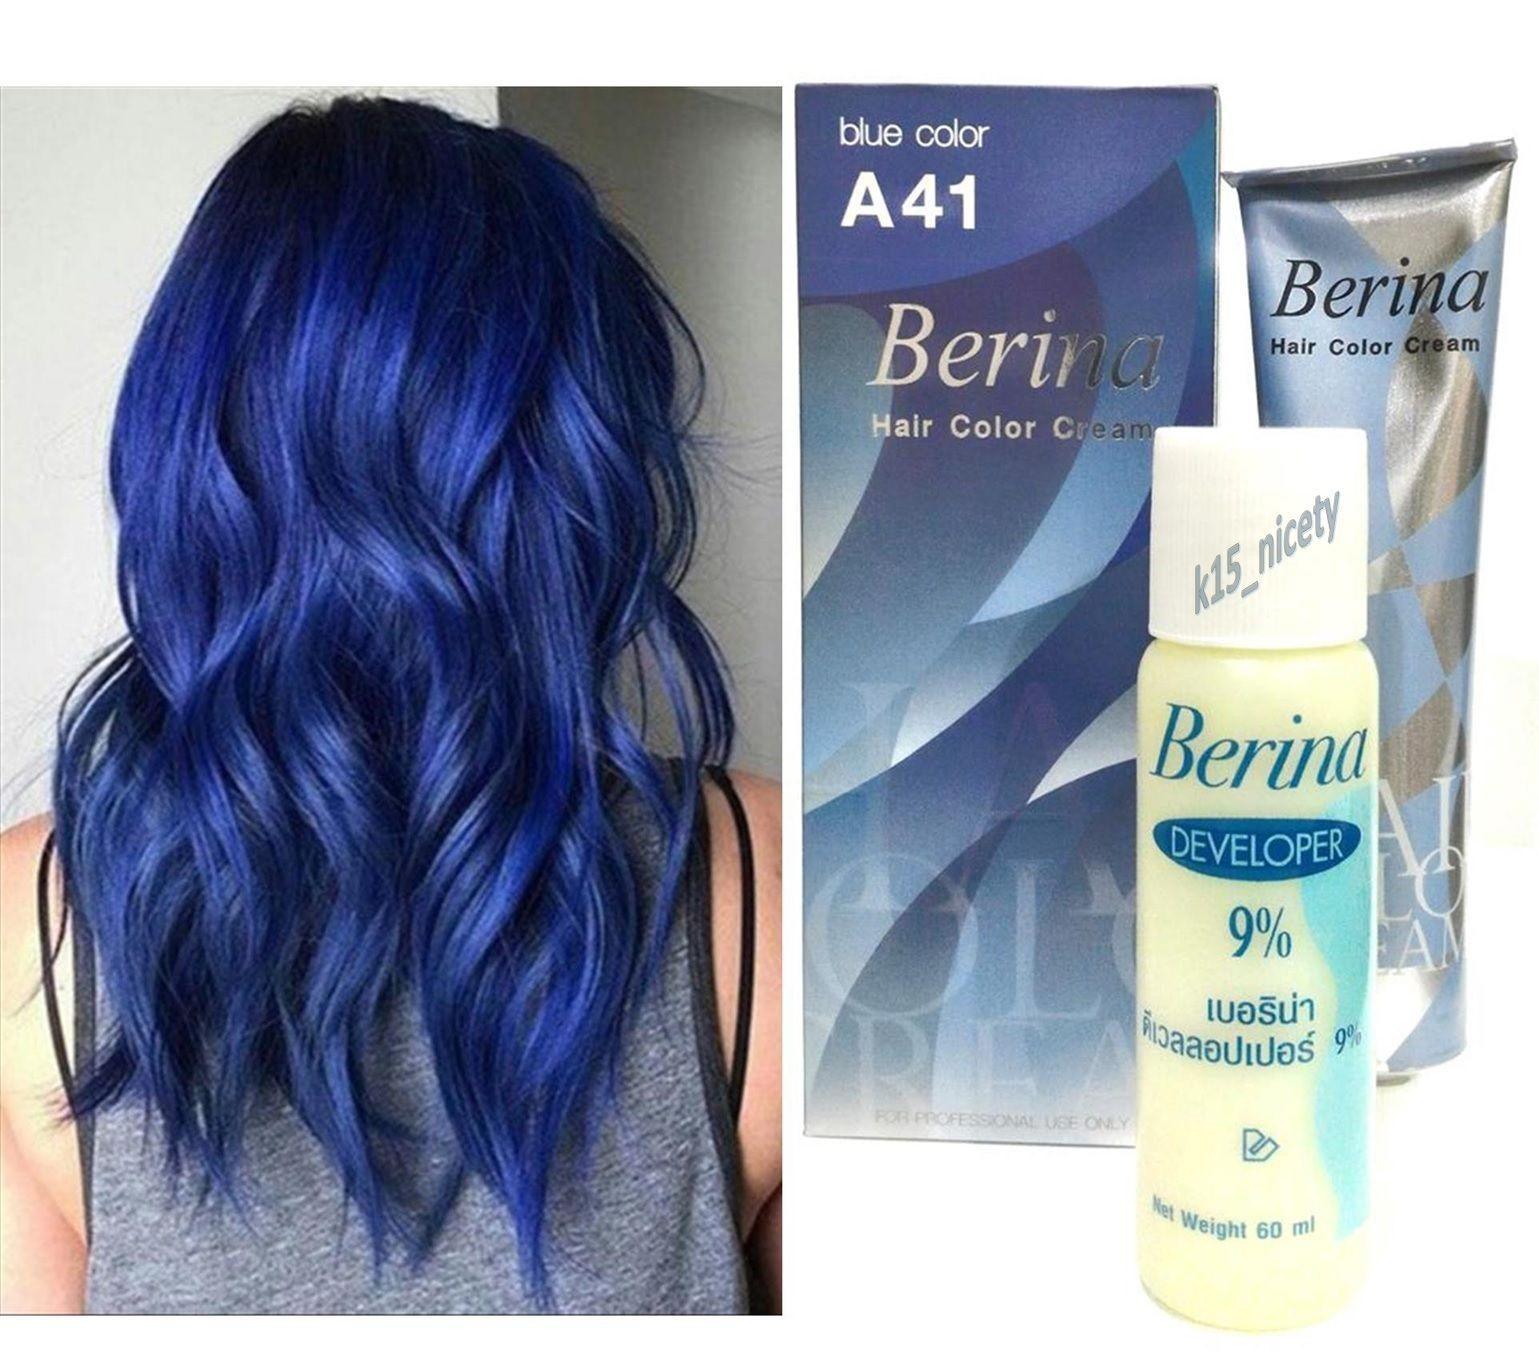 Berina A41 Blue Permanent Hair Dye Color Cream Unisex Reviews